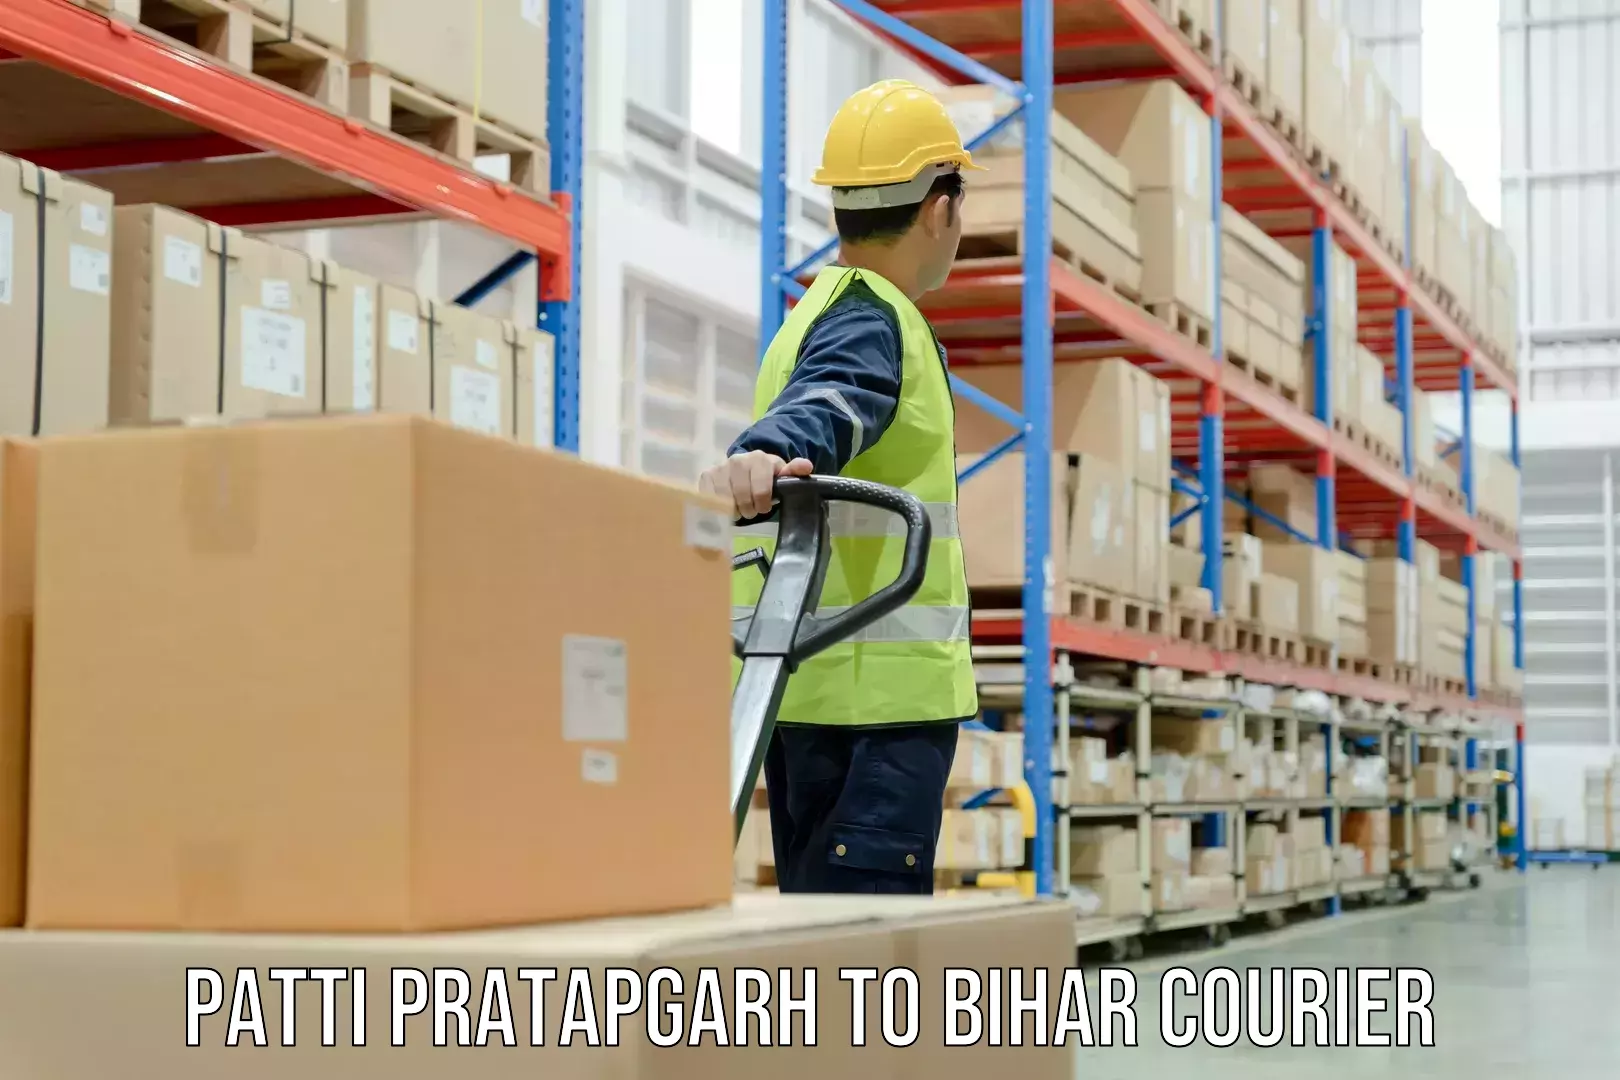 Lightweight parcel options Patti Pratapgarh to Ghogha